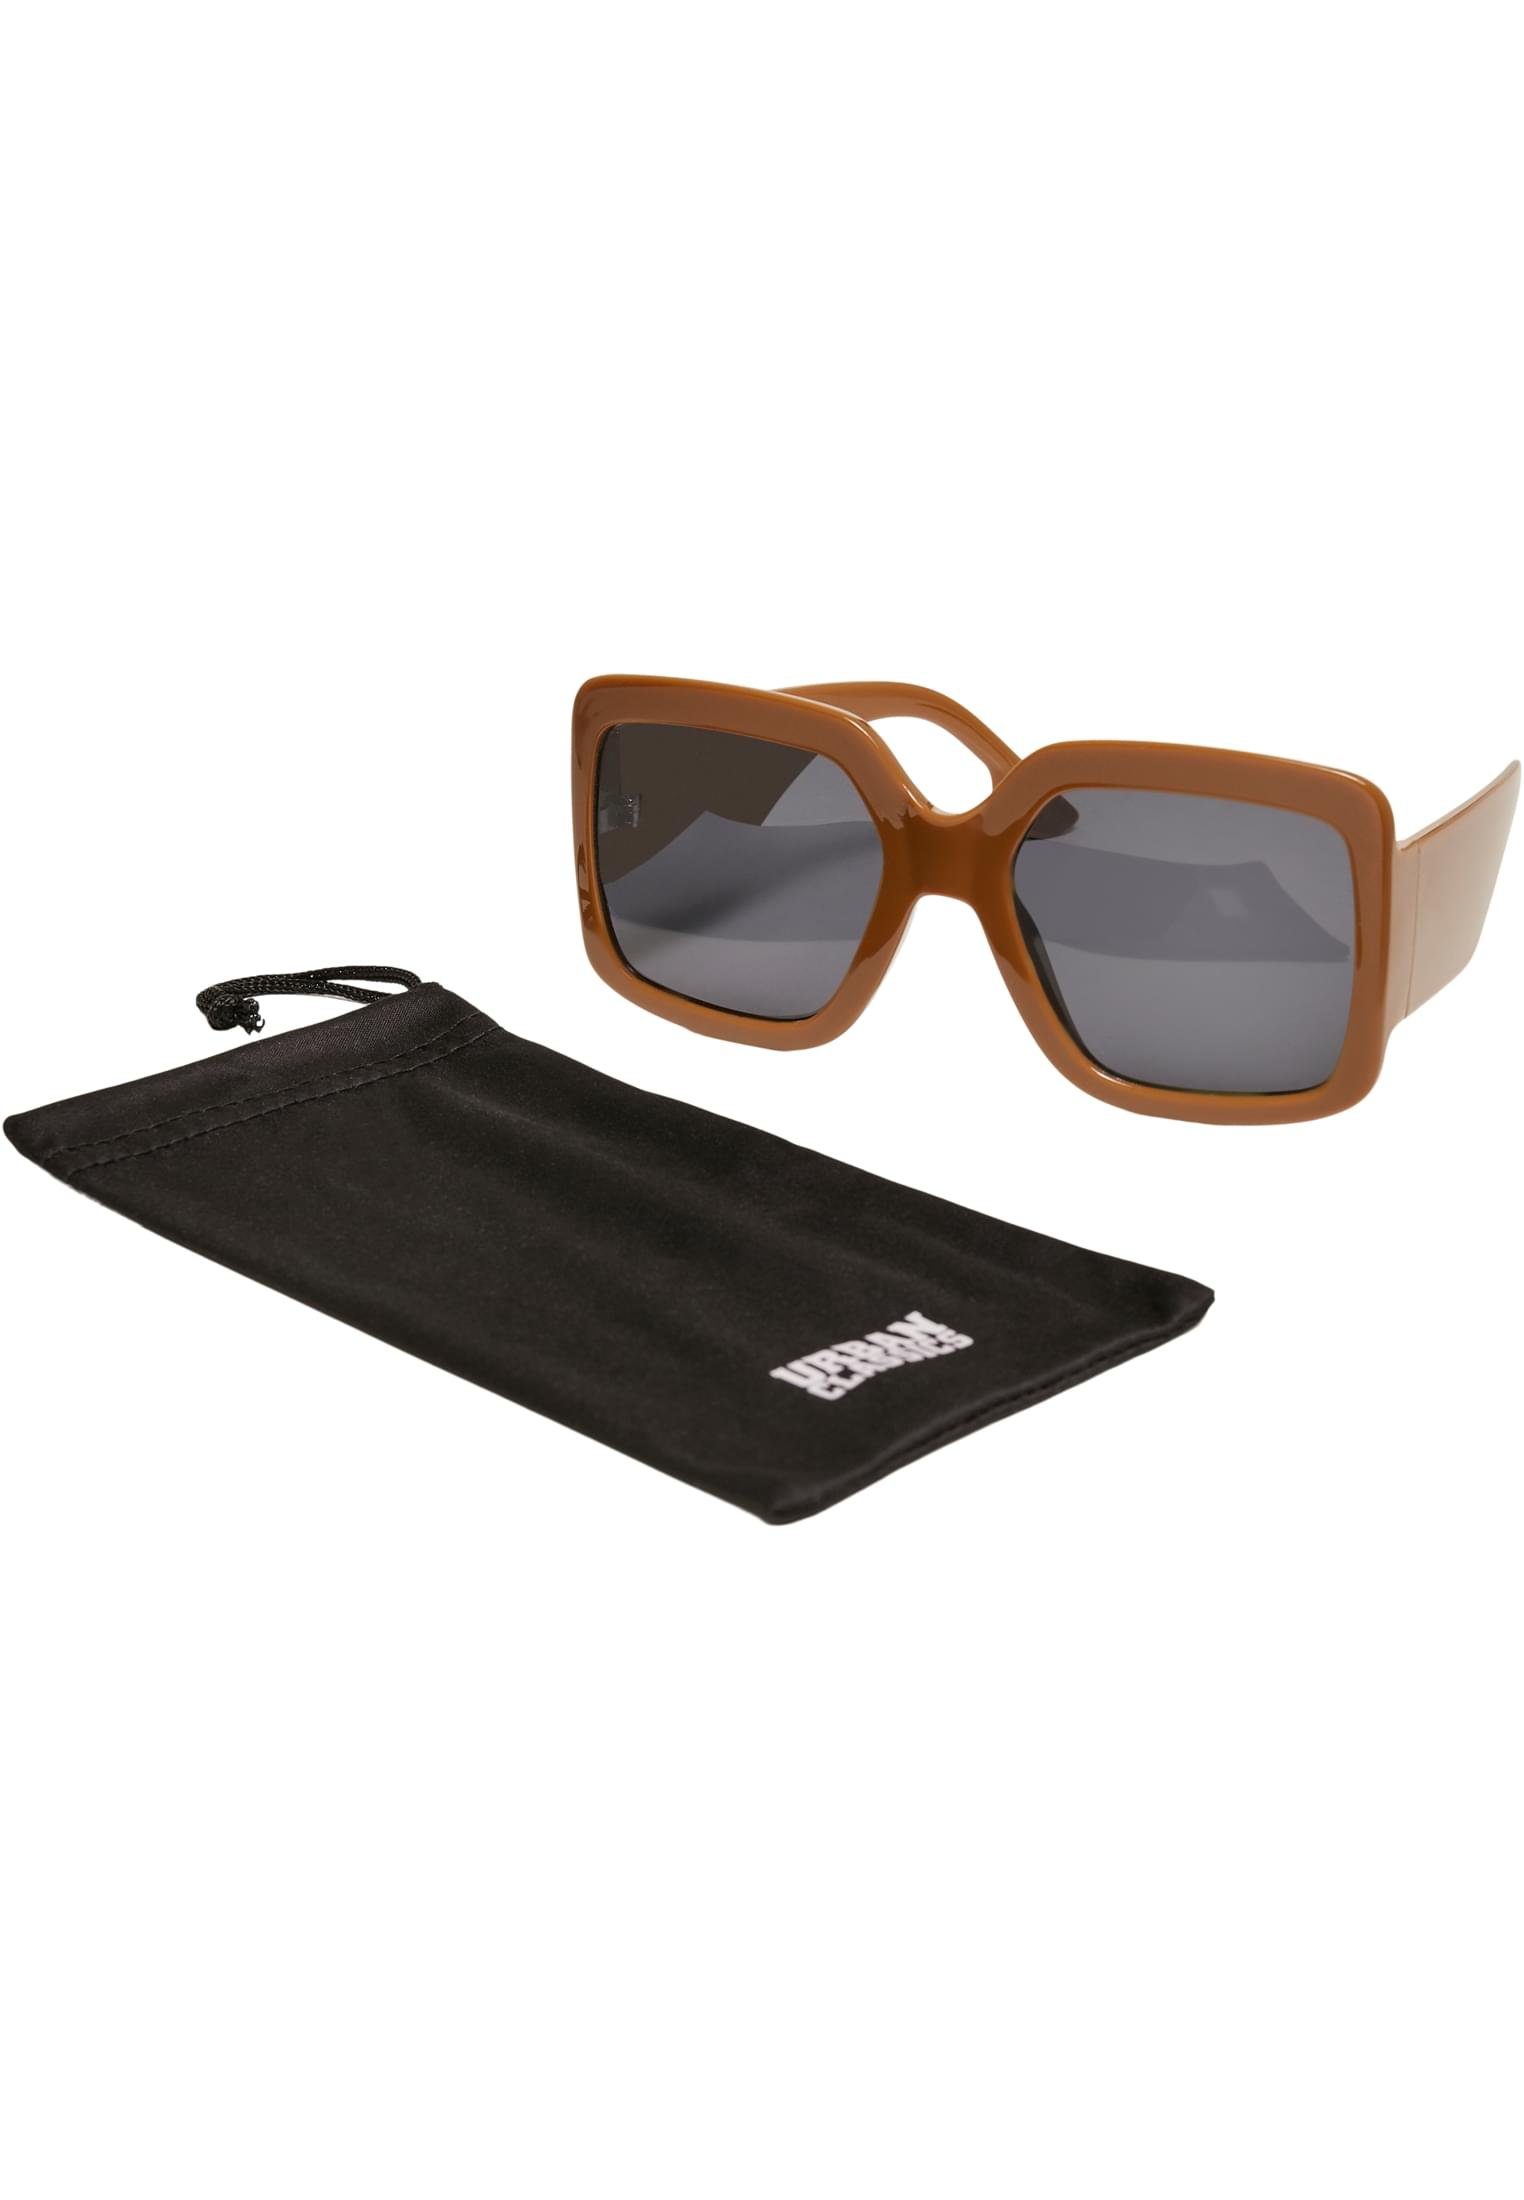 CLASSICS Sonnenbrille Monaco Sunglasses toffee Accessoires URBAN